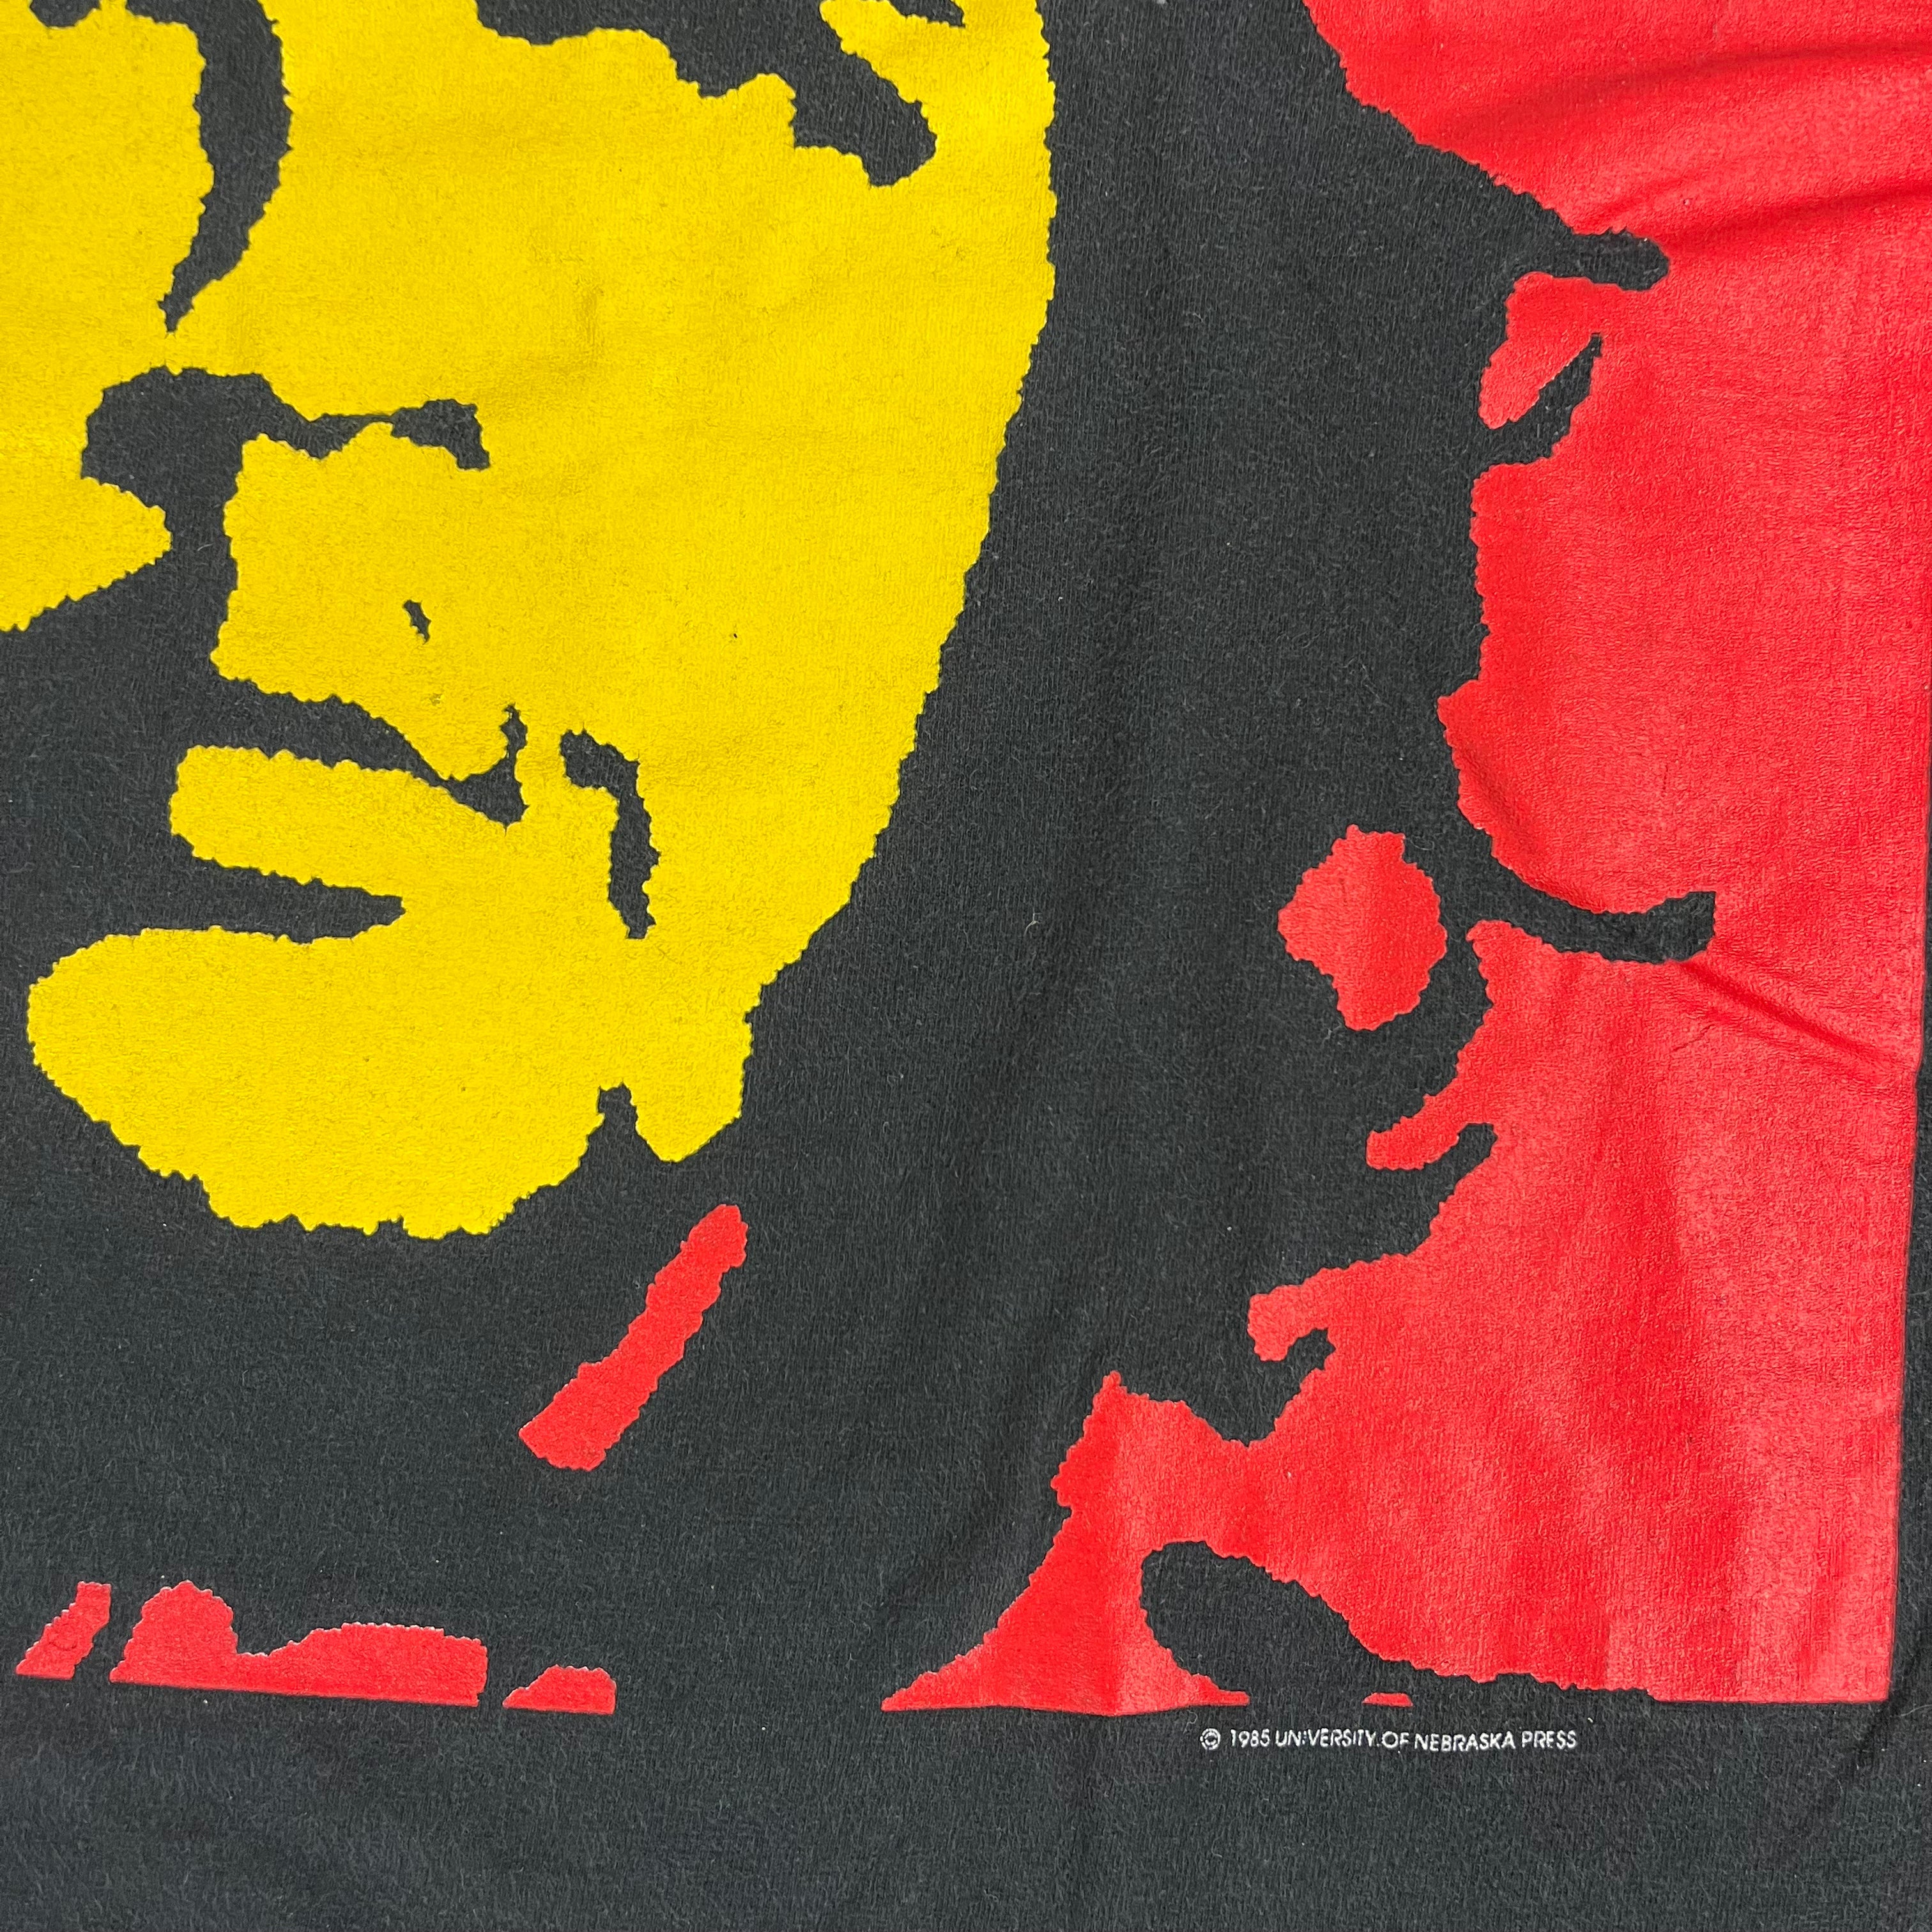 Vintage Vintage Che Guevara Rage Against The Machine RATM T-Shirt